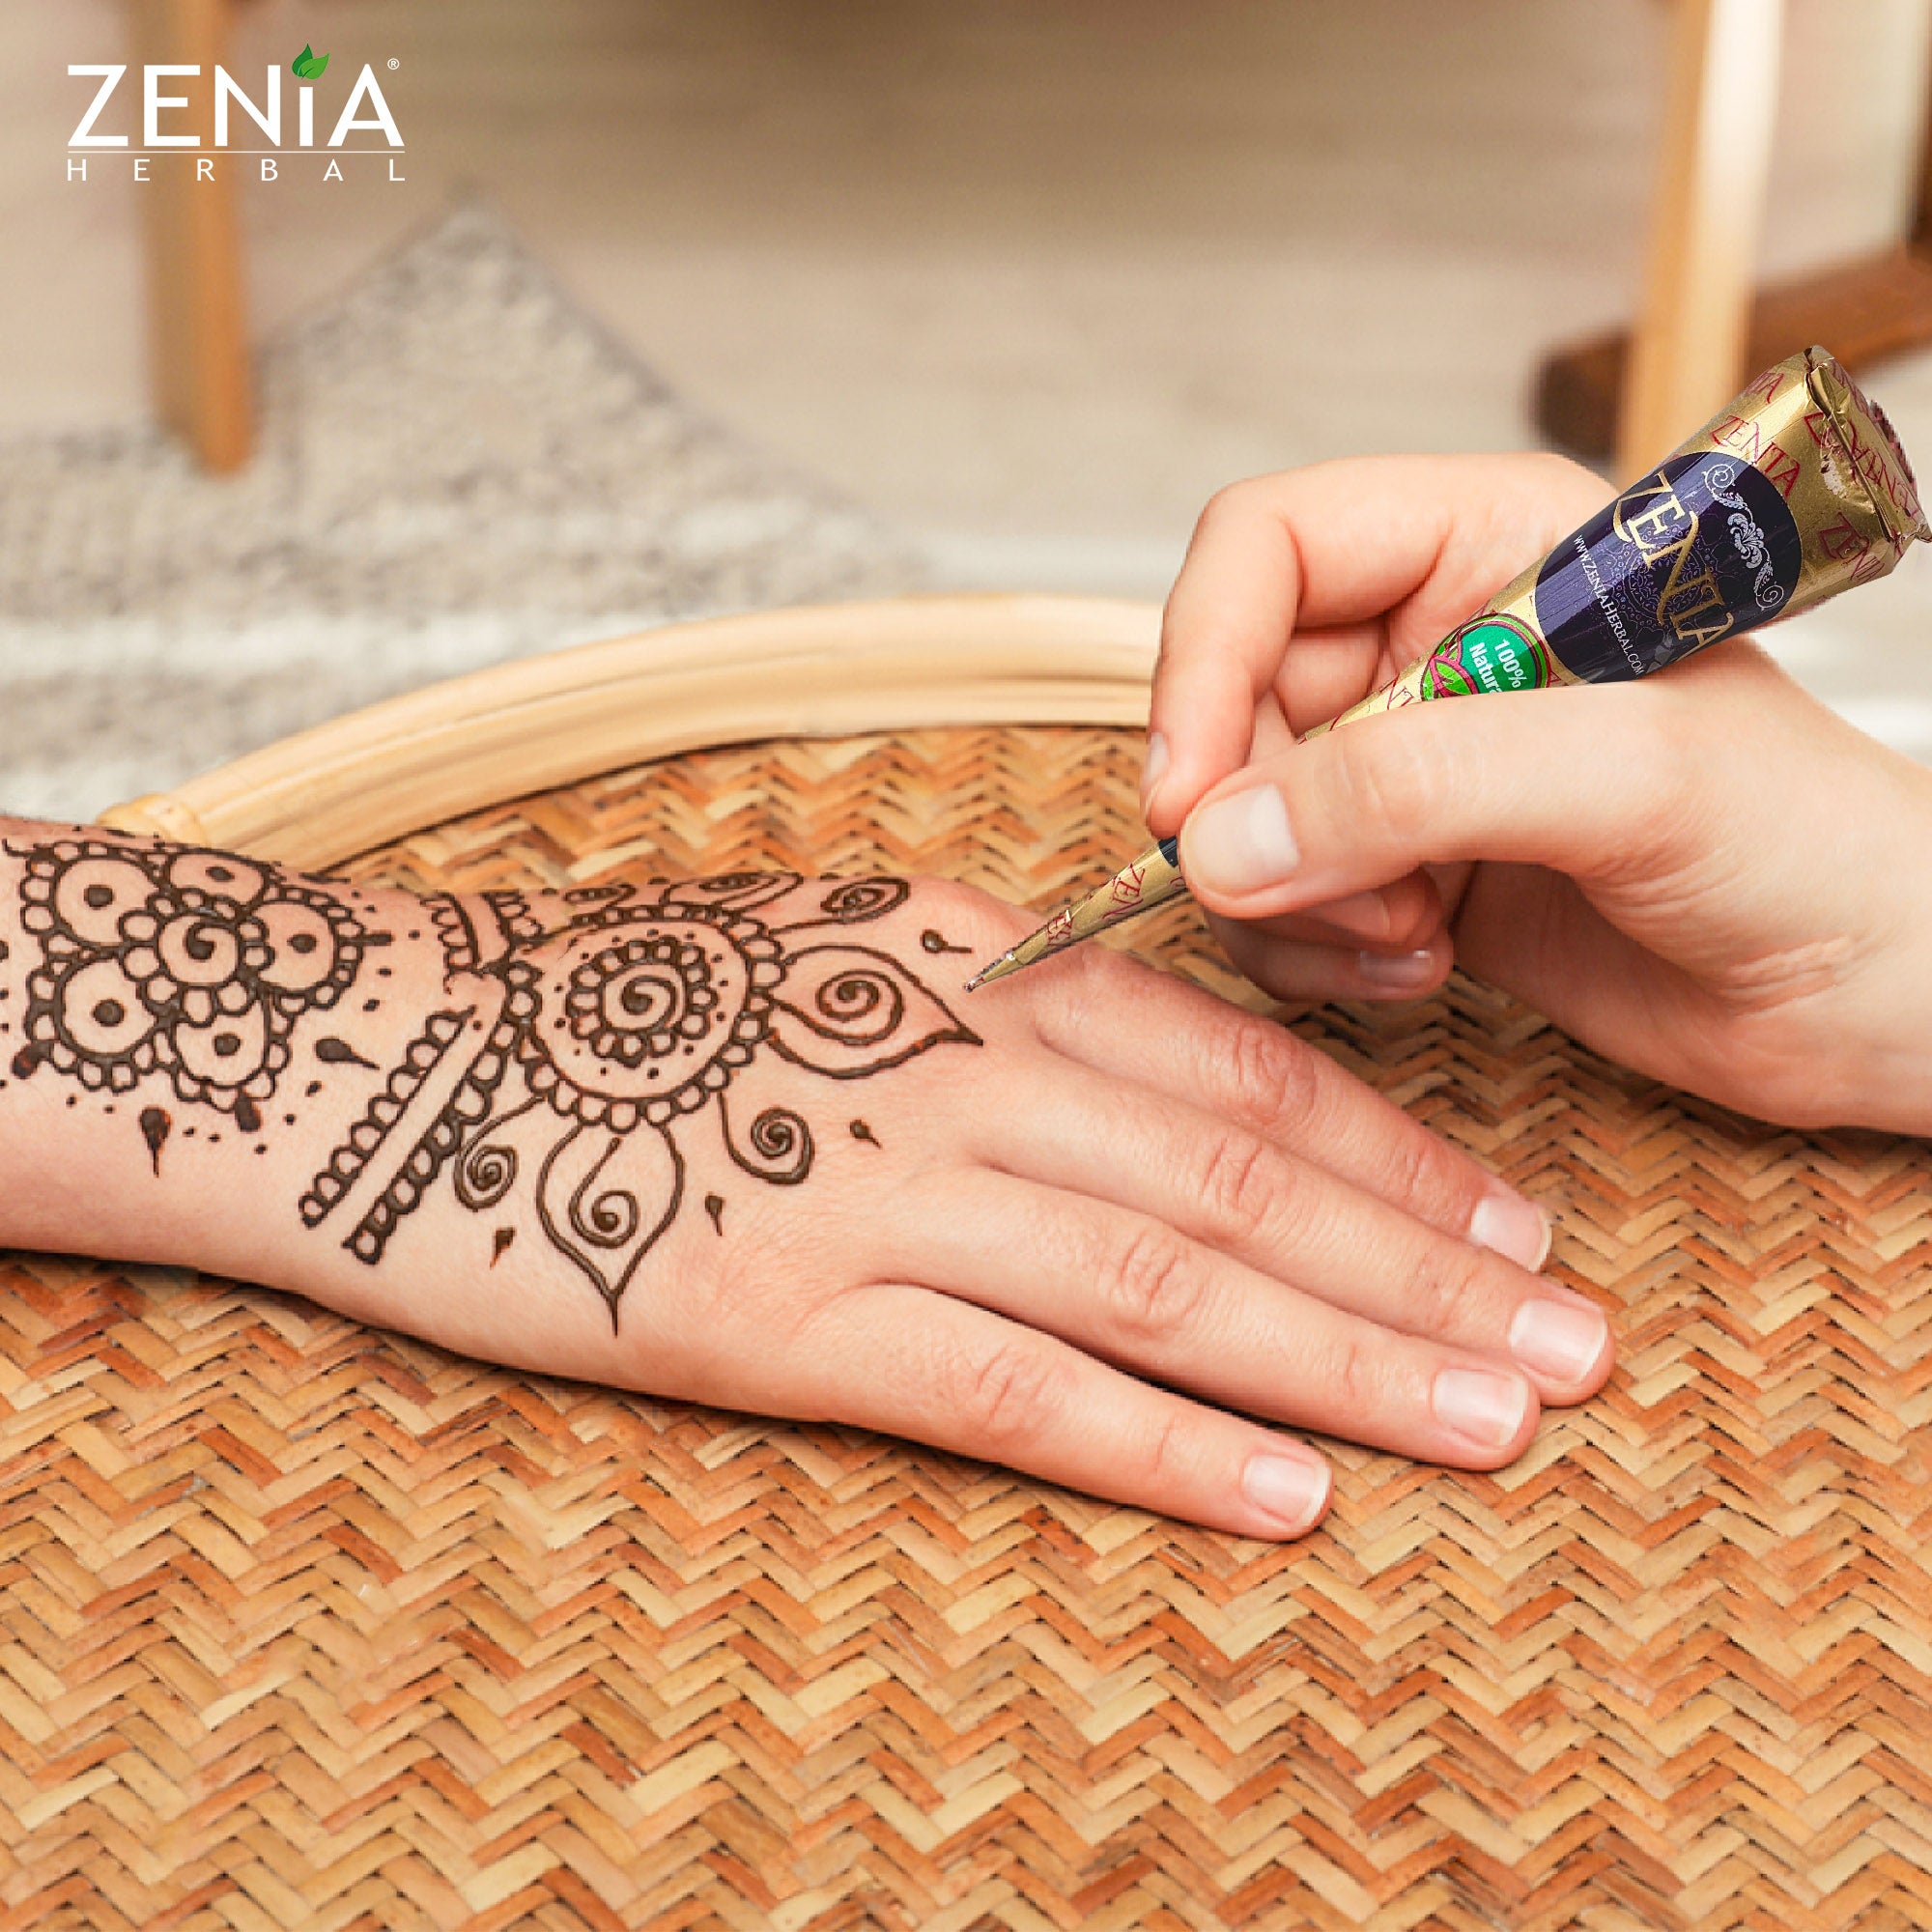 Zenia 100% Natural Henna Cone | Herbal Henna Paste Cones